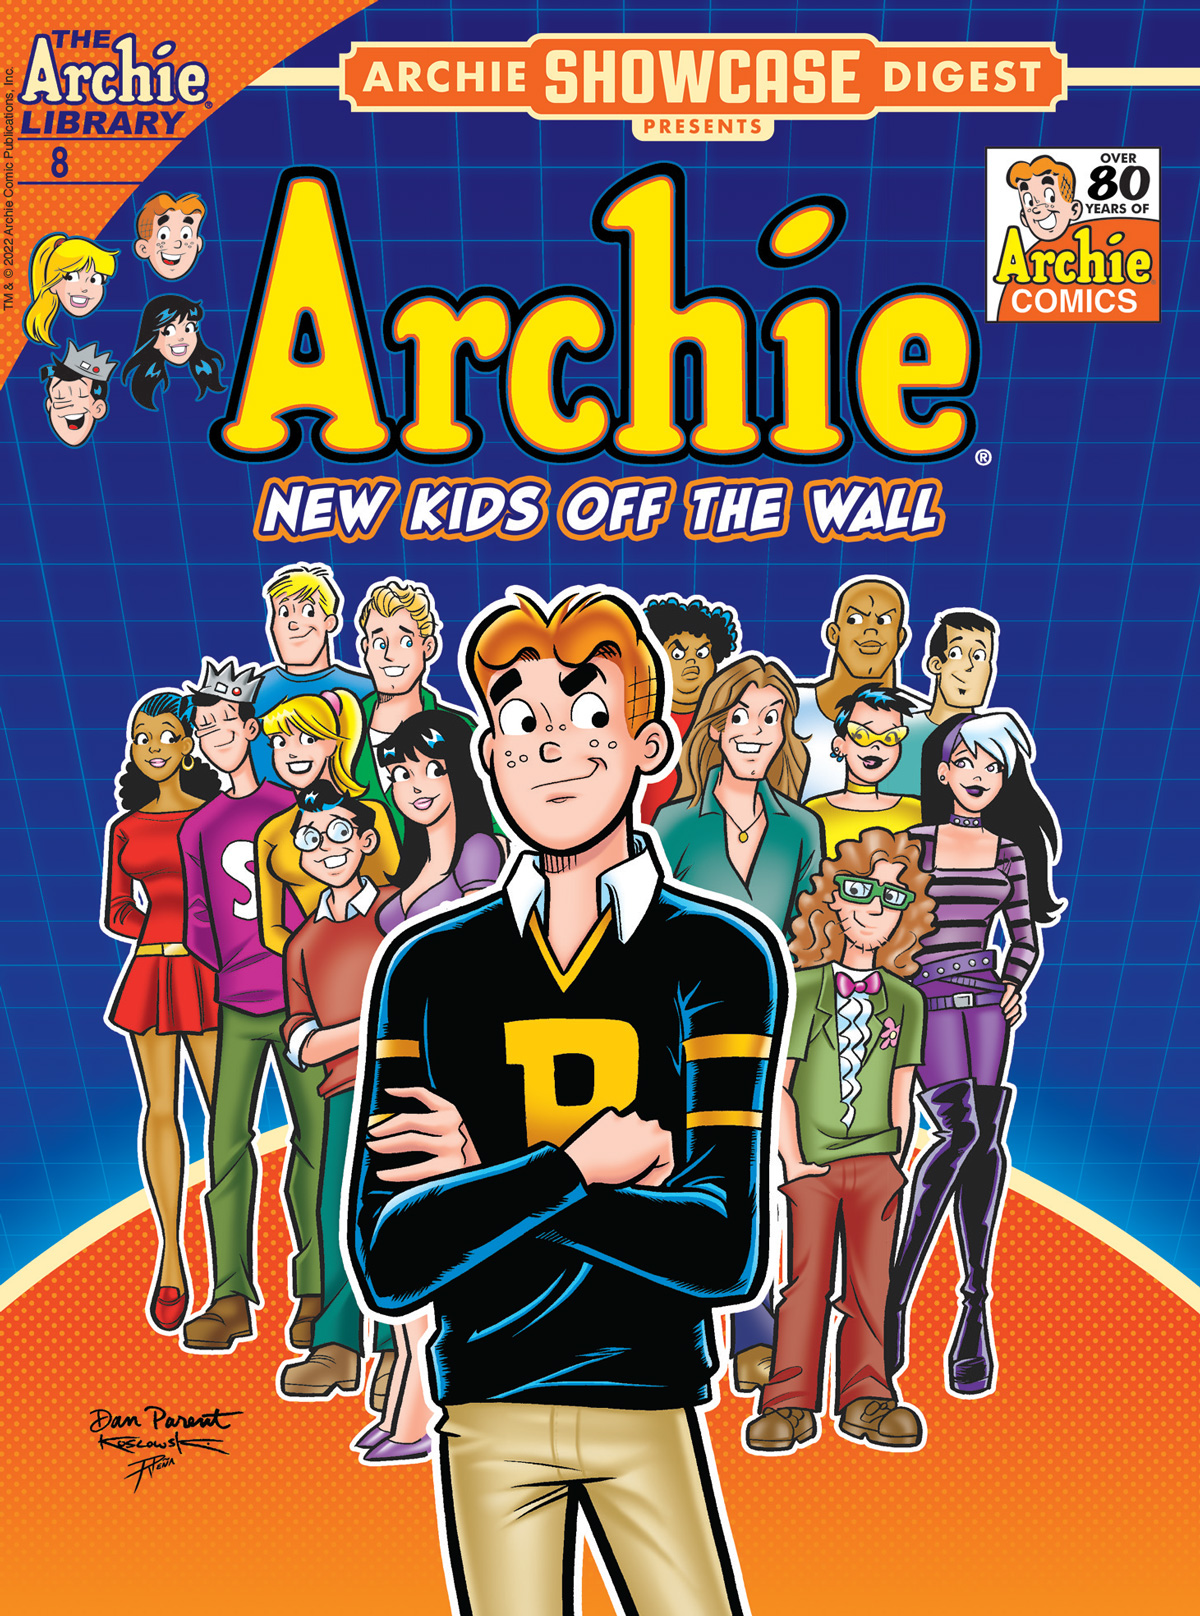 Meet the New Kids! - Archie Comics